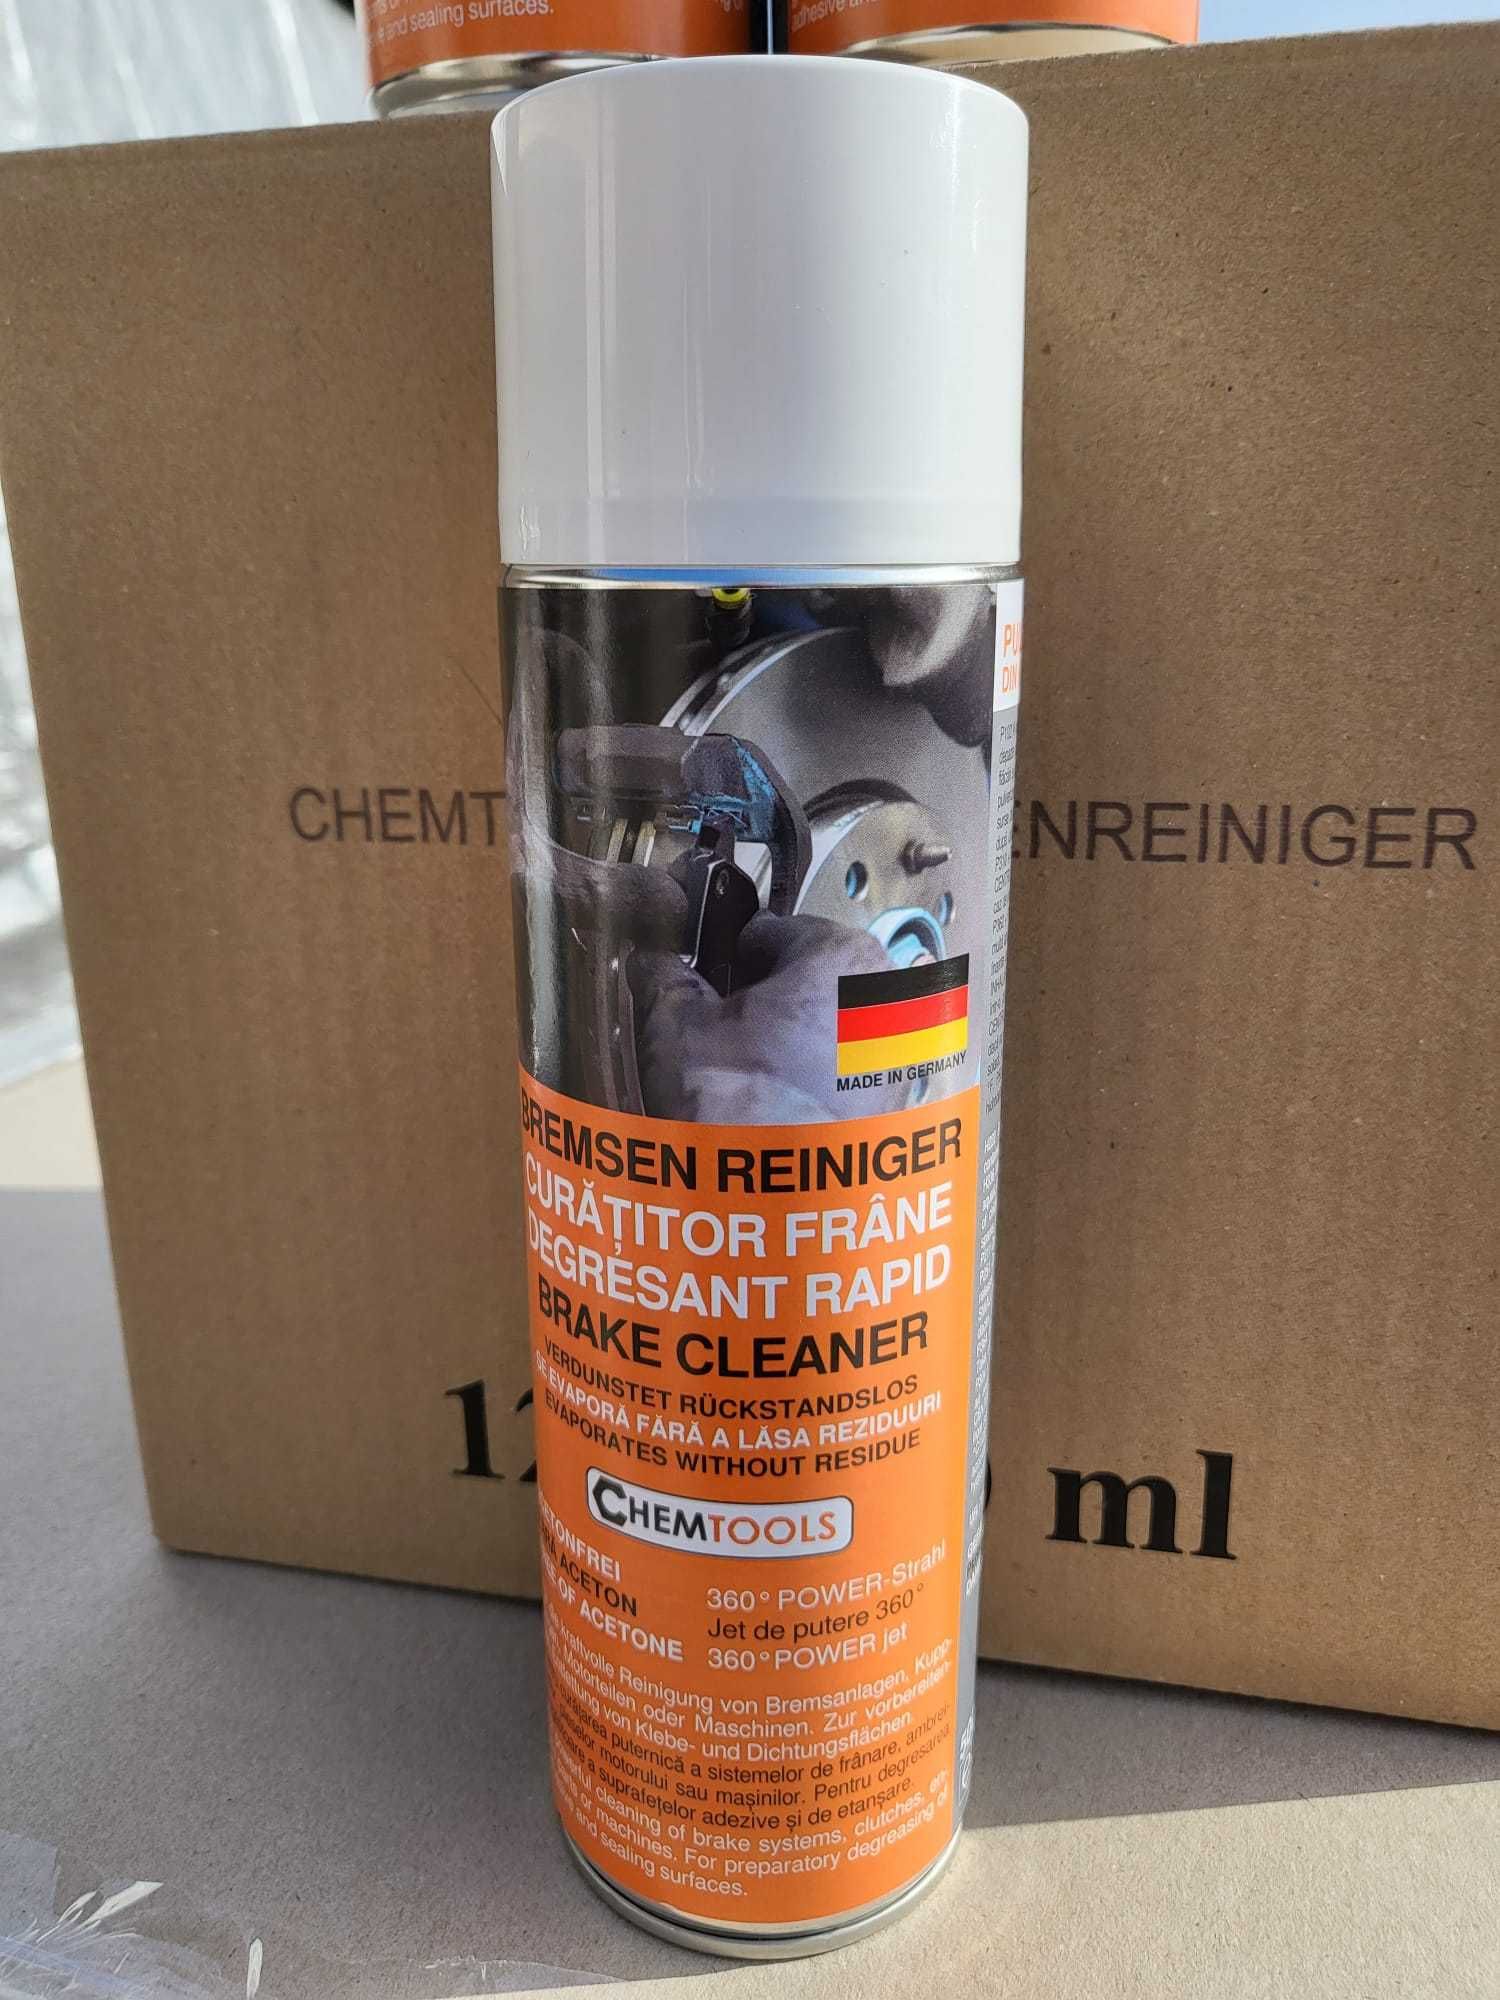 Curatator frane spray 500ml-GERMANIA.12BUC/Bax.Jet lung/buc+tva